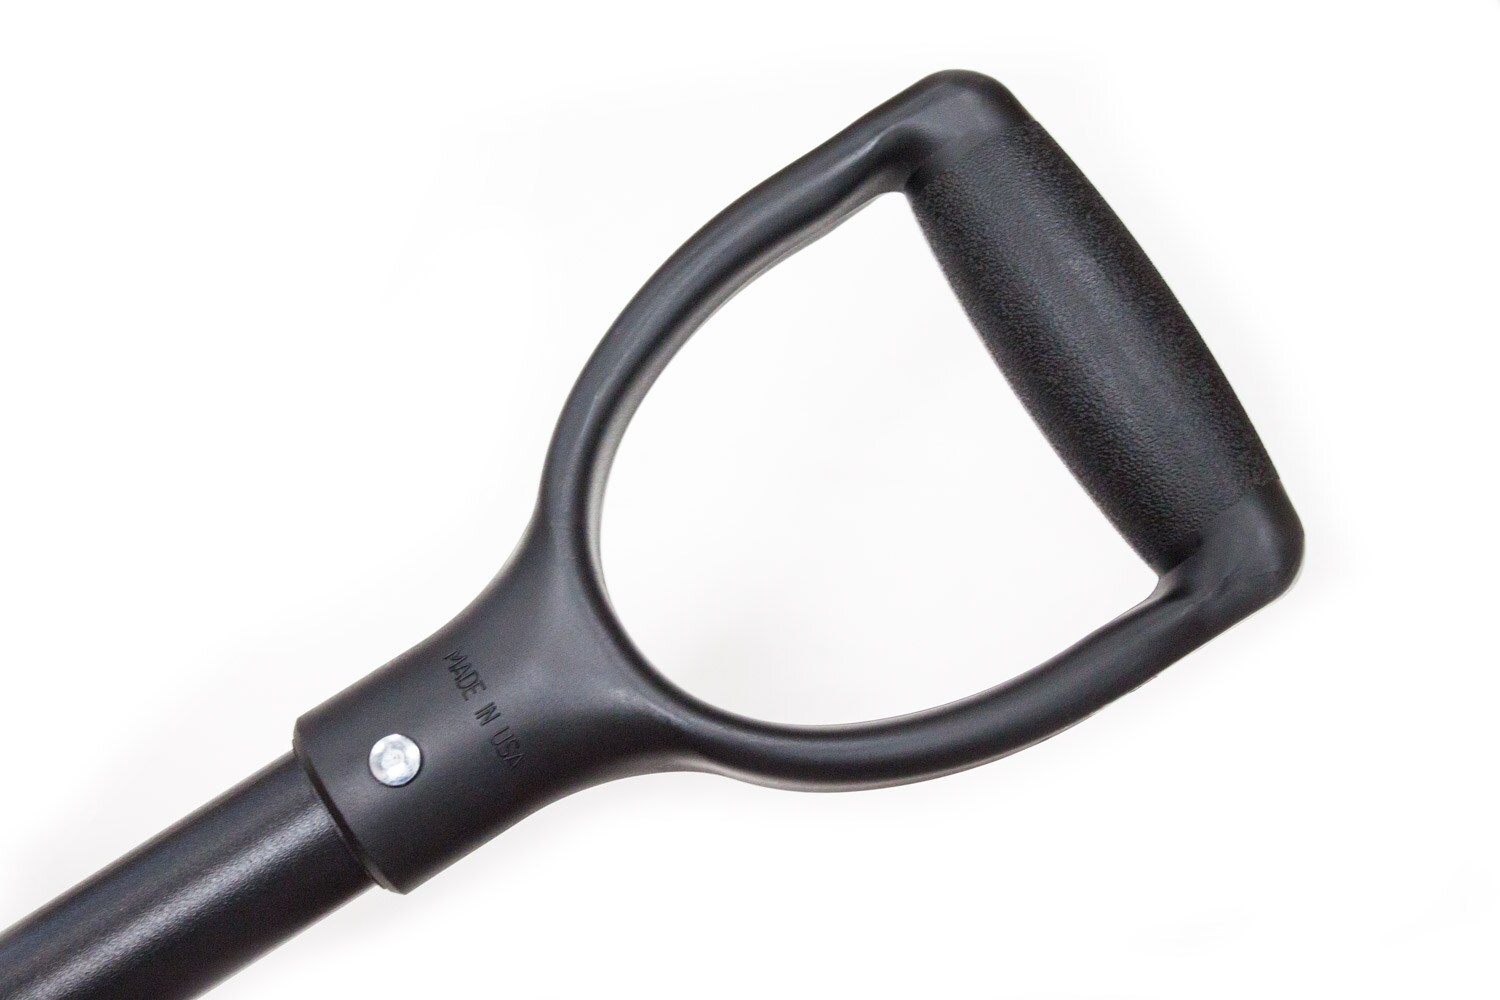 Bully Tools 26-in Steel D-Handle Garden Spade in the Shovels